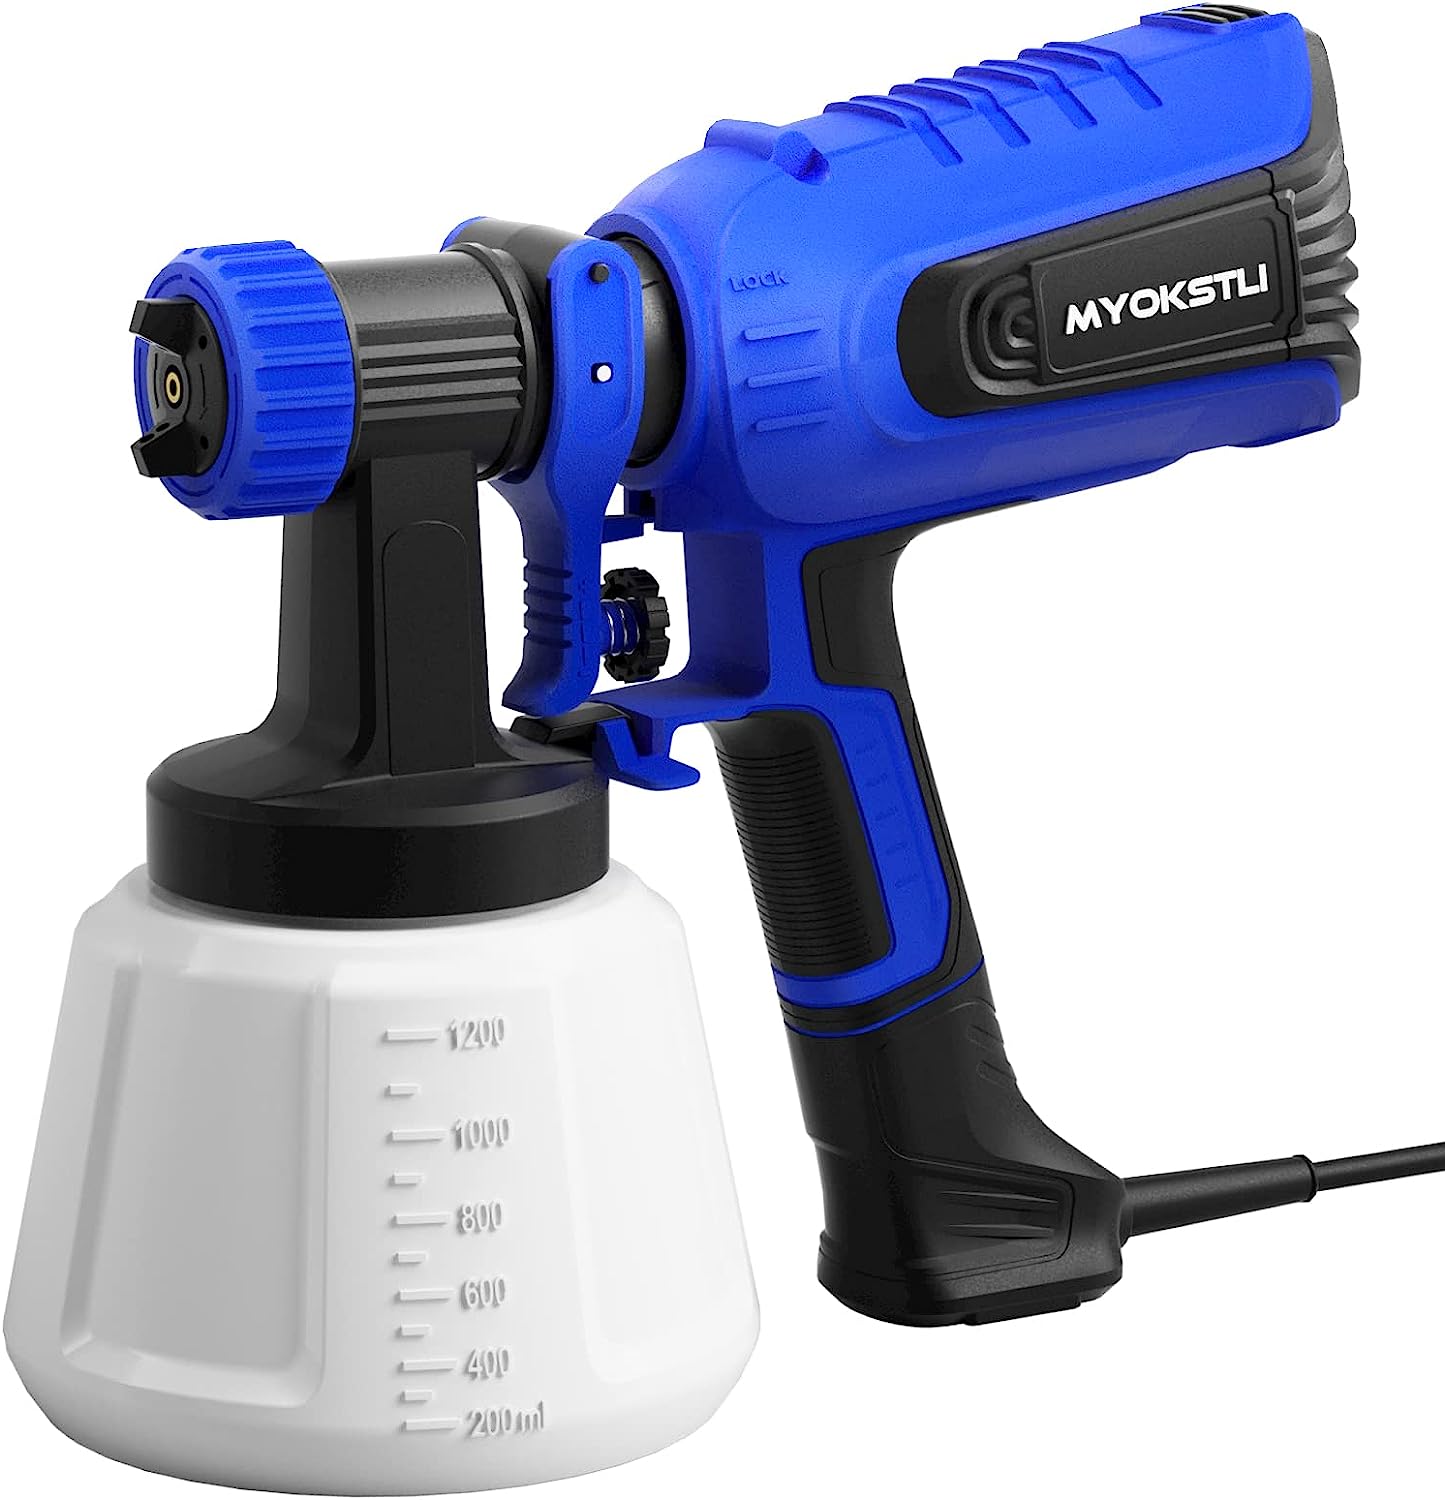 MYOKSTLI Paint Sprayer, 700W Spray Paint Gun with [...]